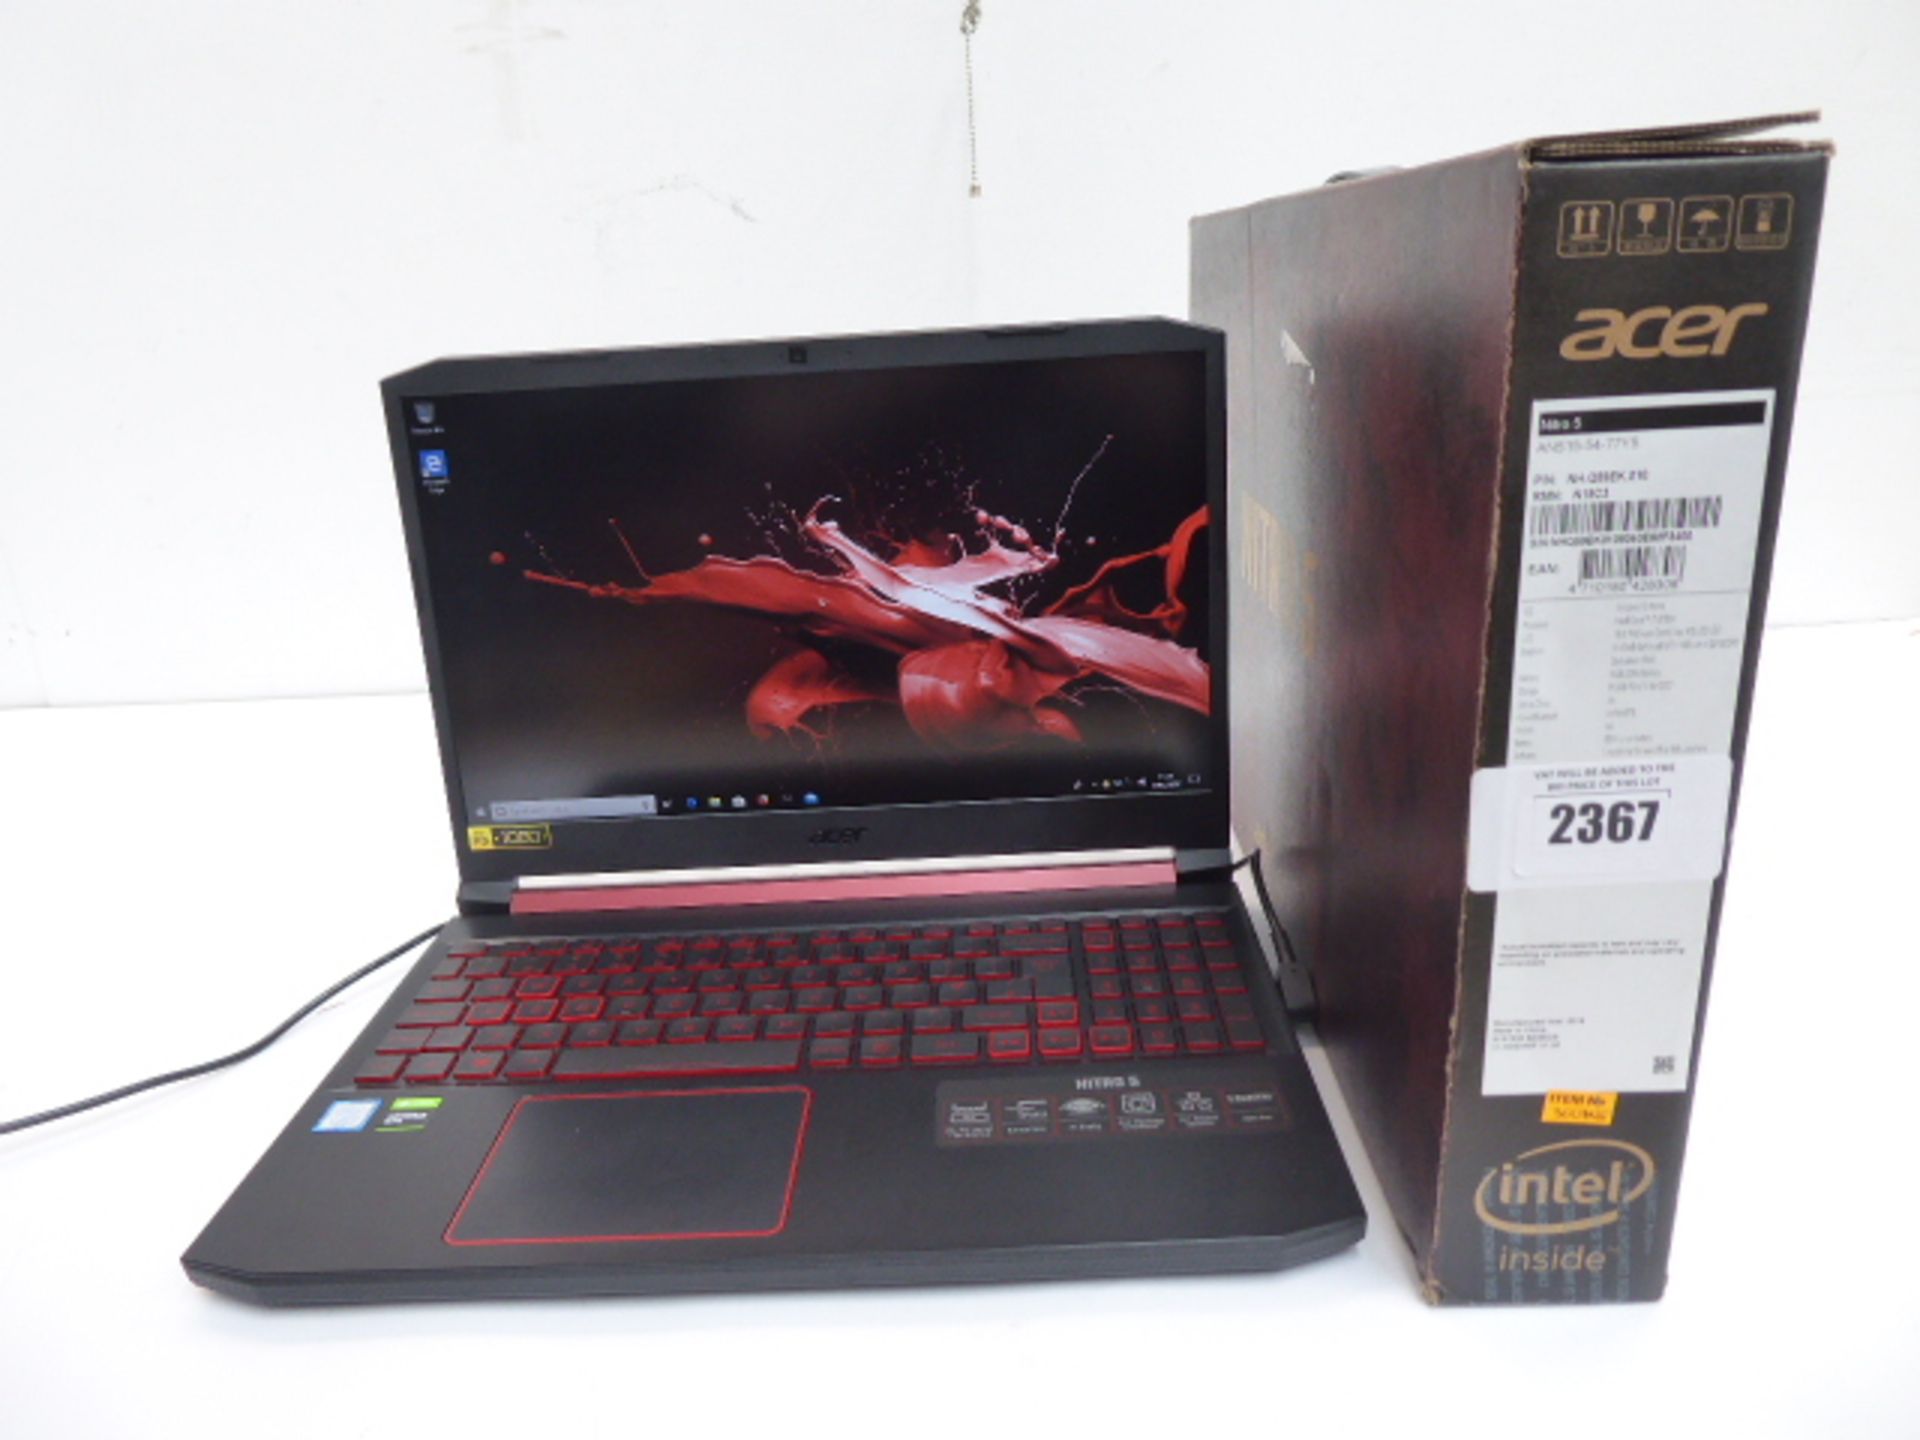 Acer Nitro 5 15.6'' 512GB SSD, i7-9750H, GeForce GTX 1650, 8GB RAM laptop with box and PSU